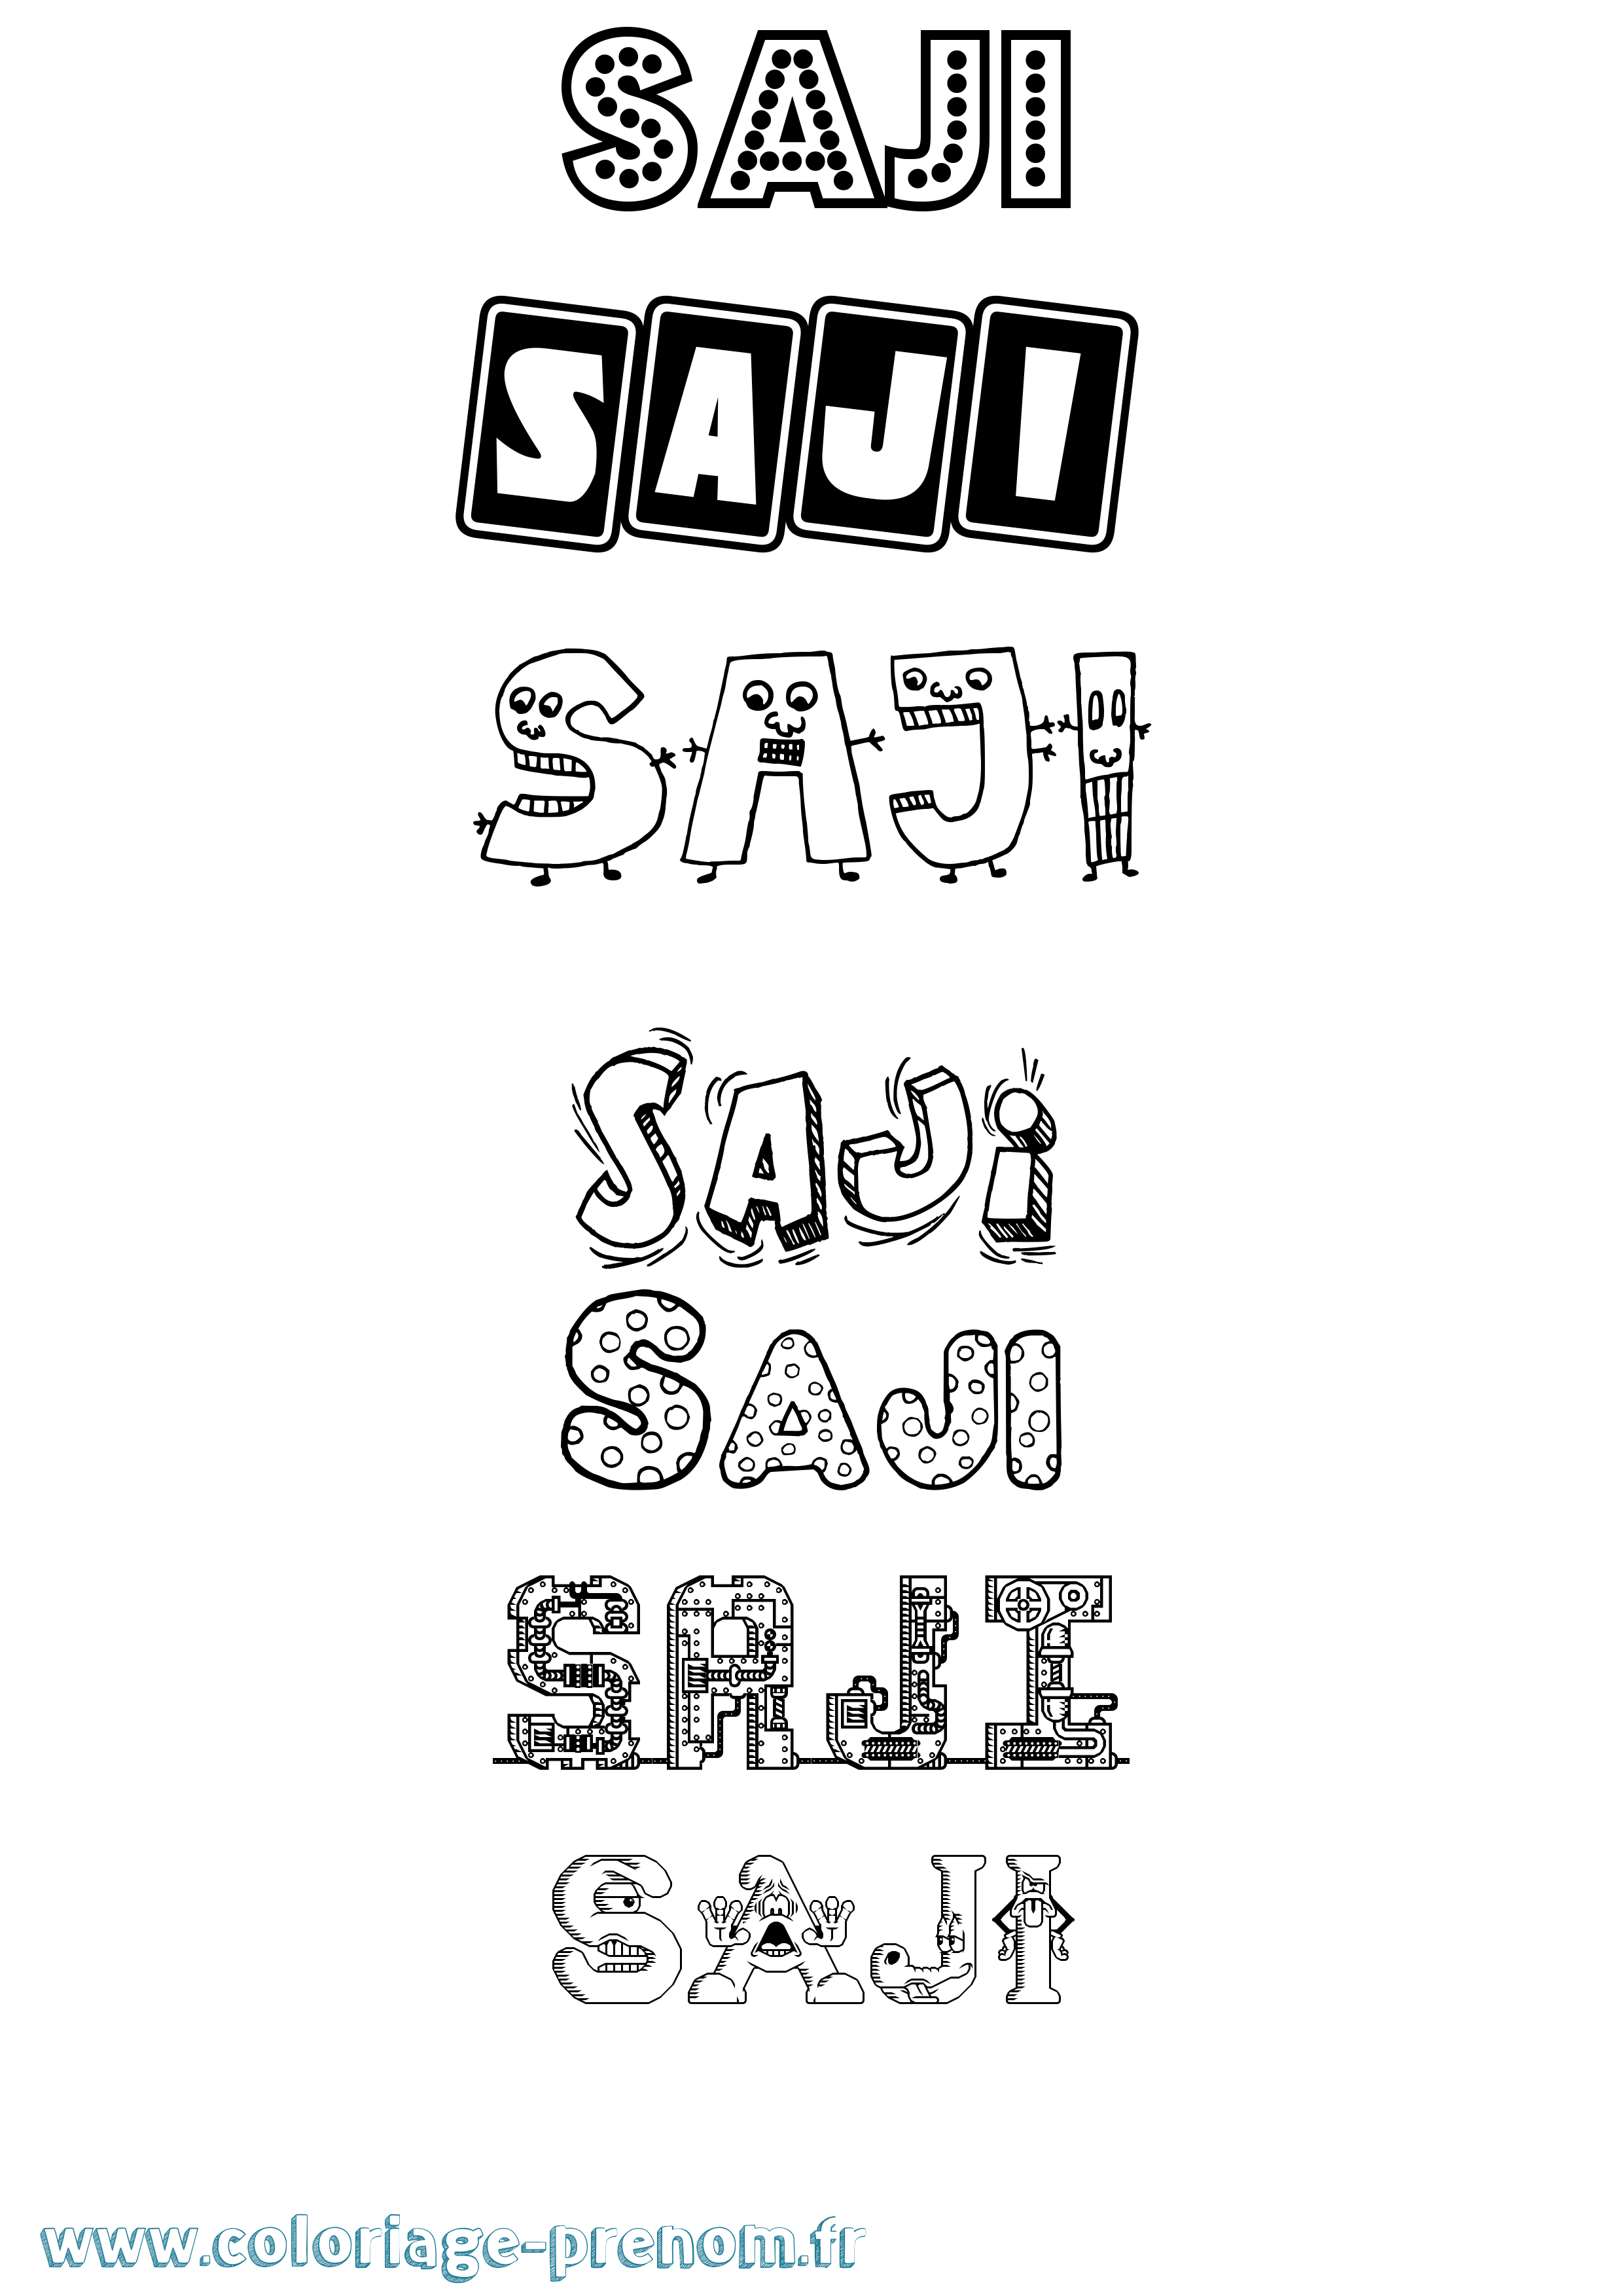 Coloriage prénom Saji Fun